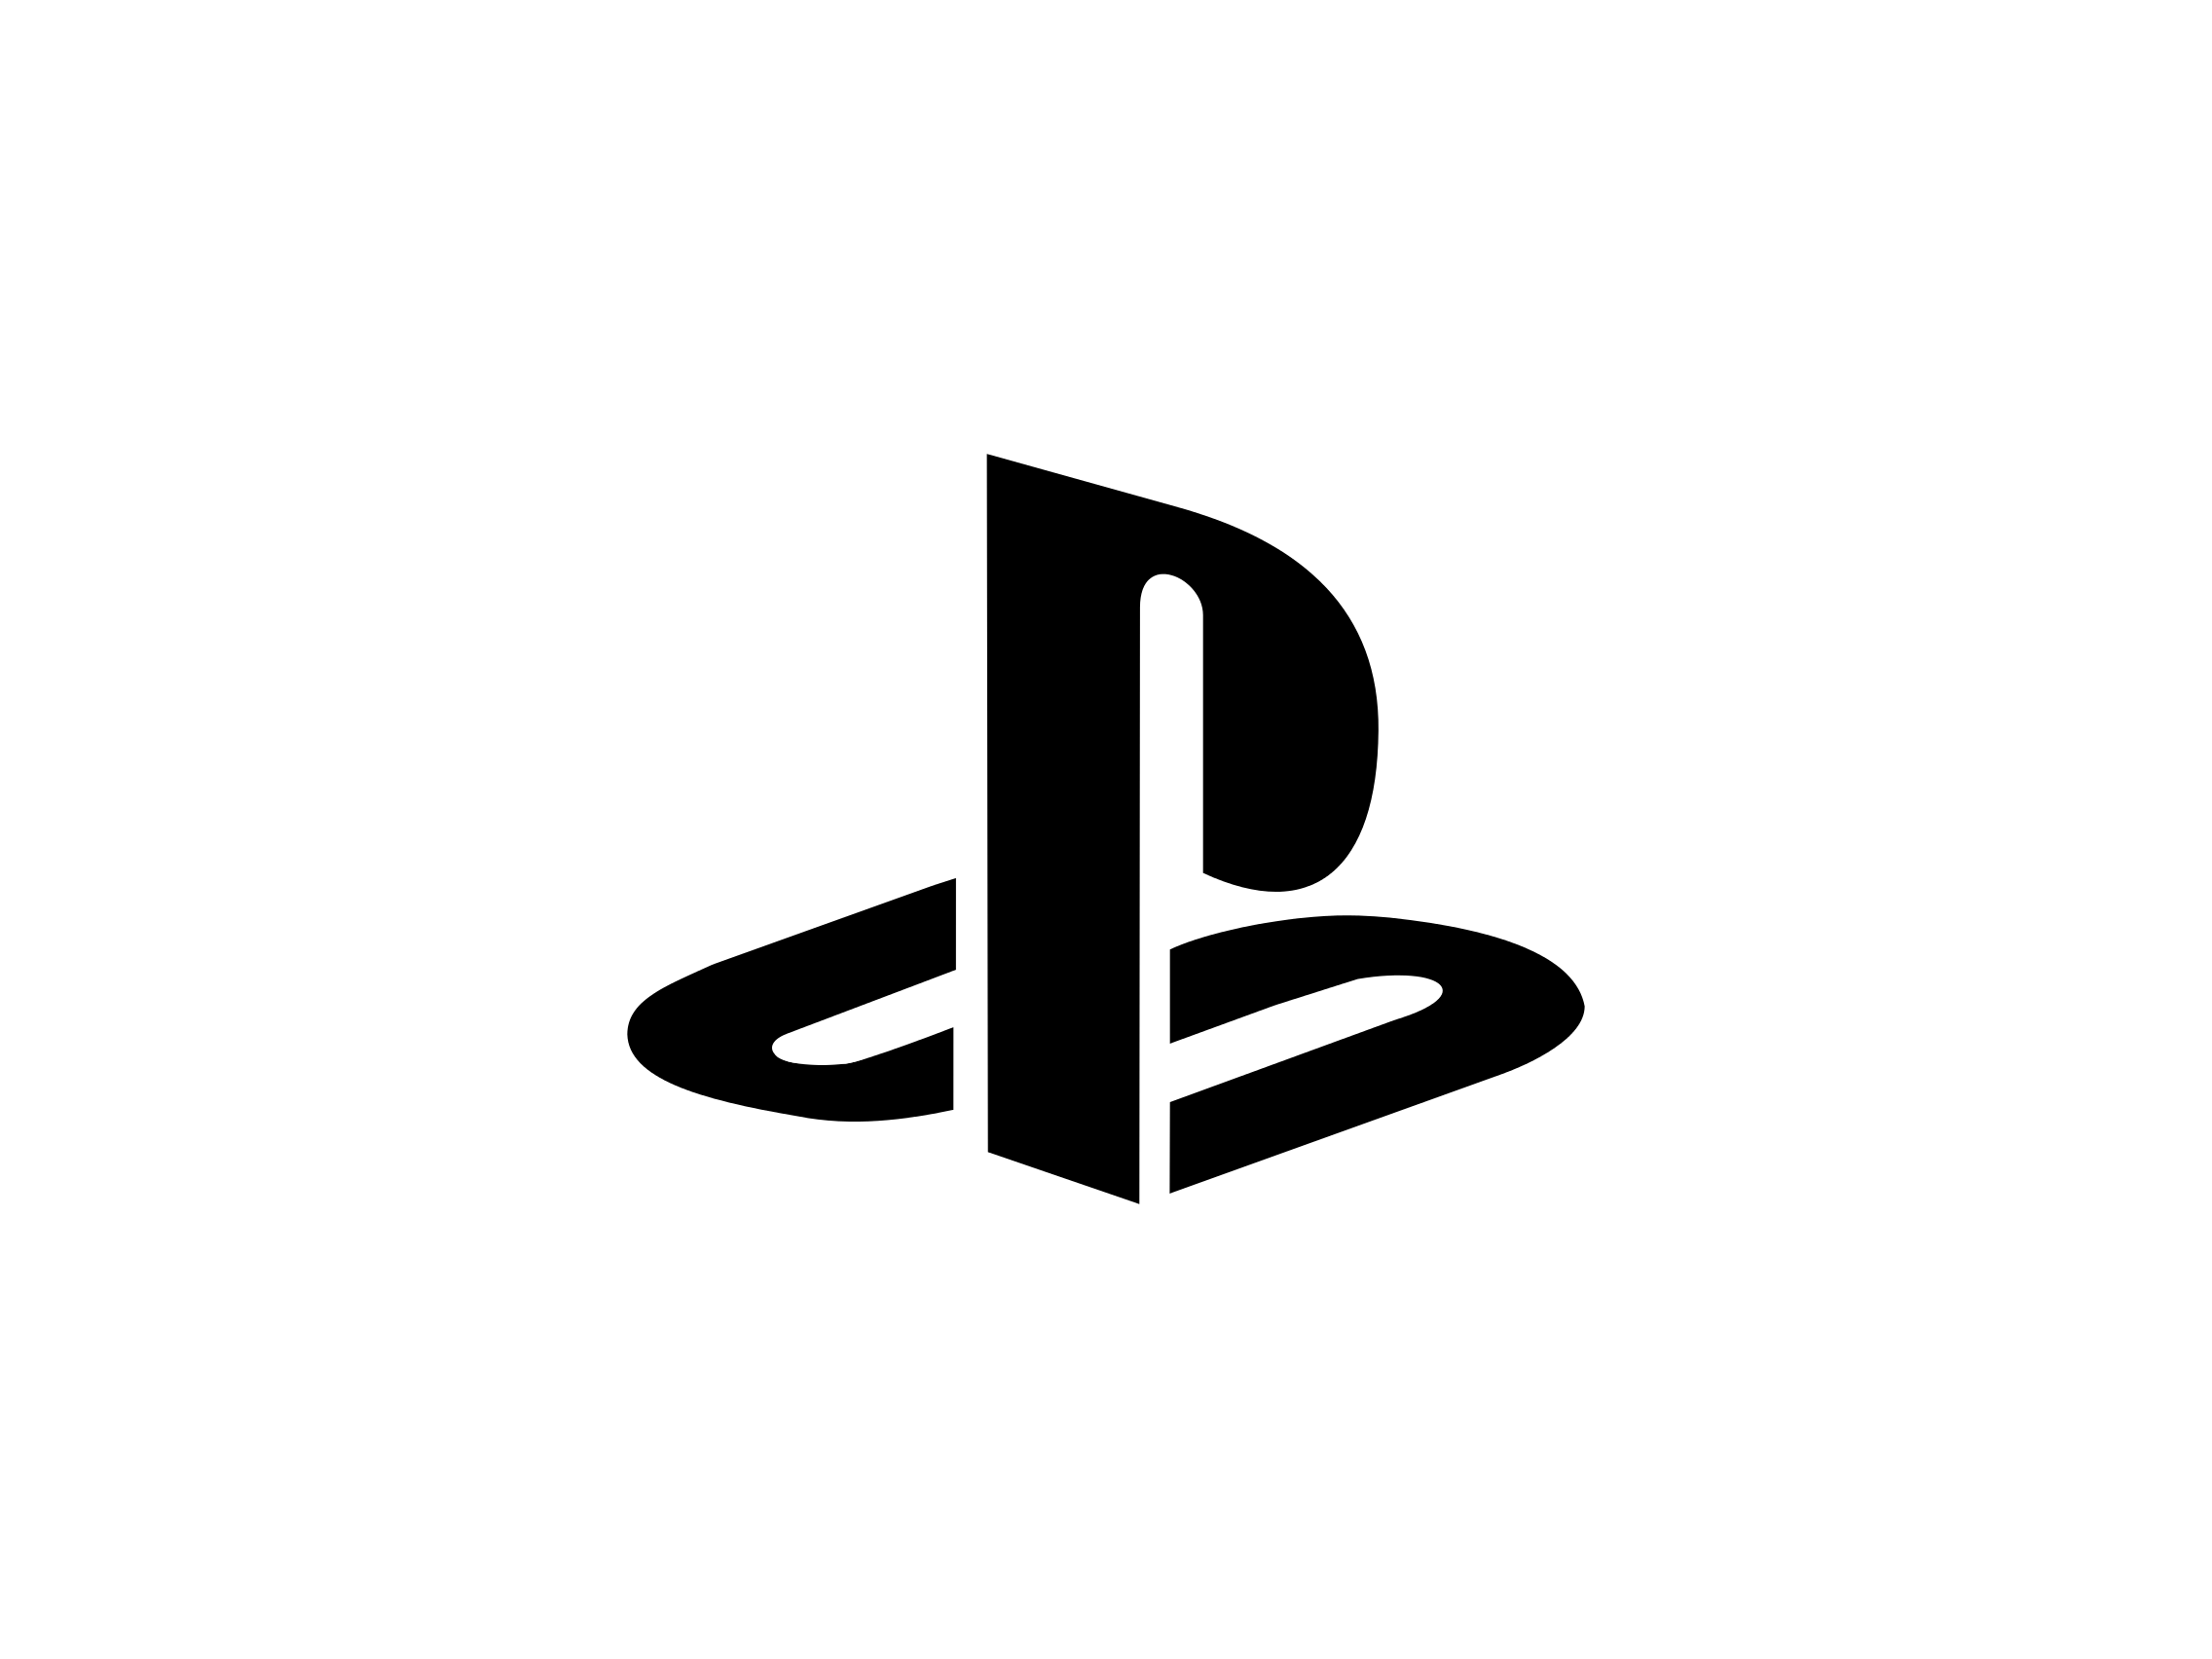 PLAYSTATION 4 logo